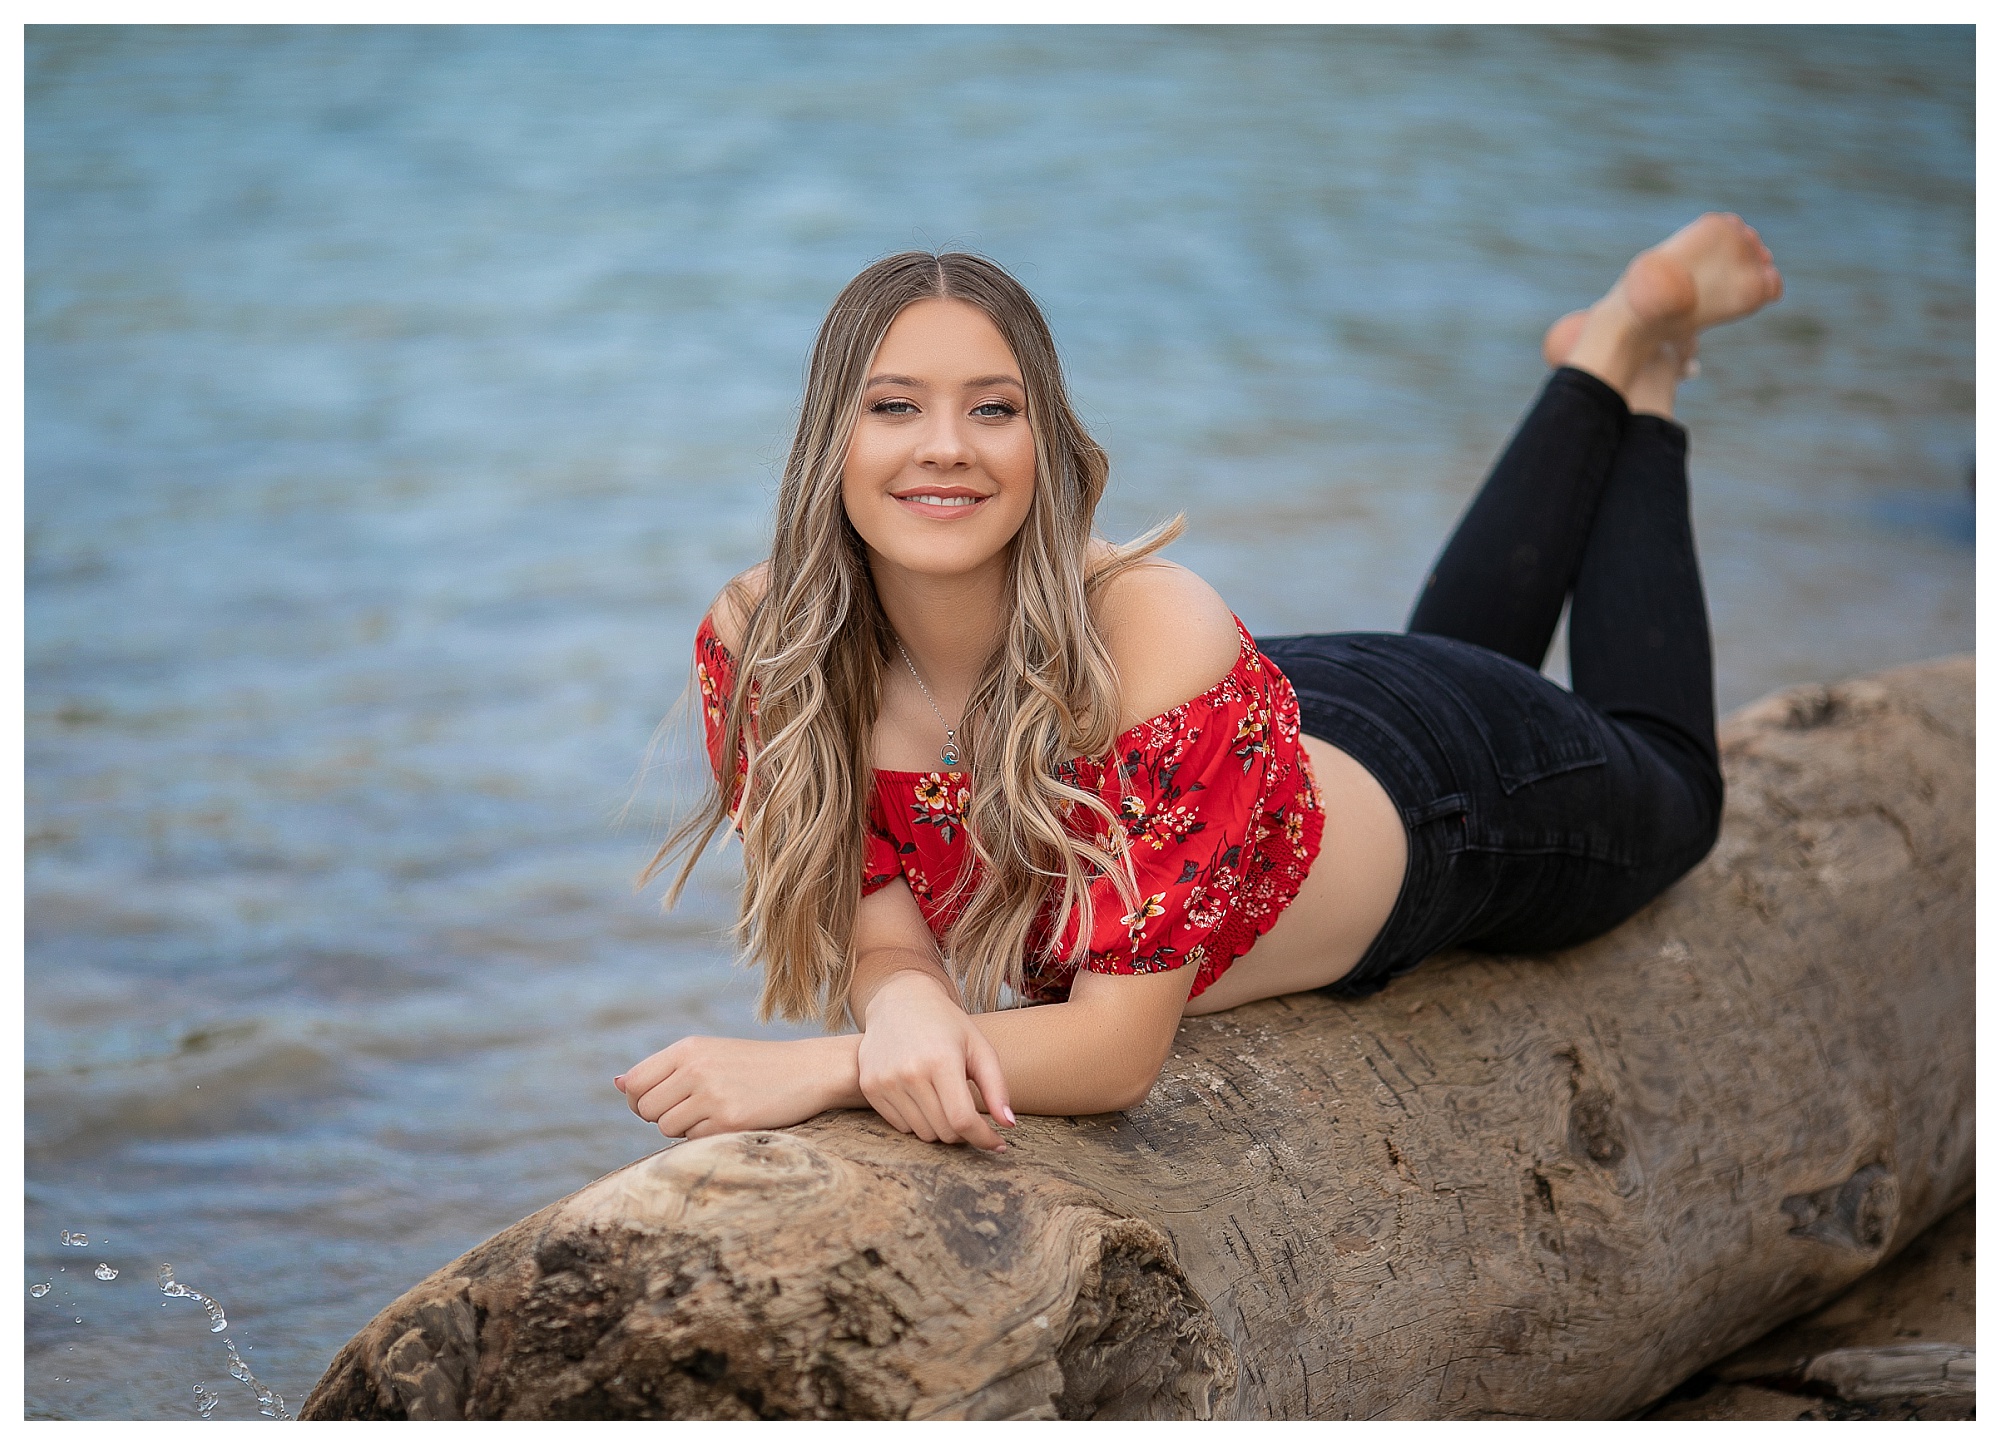 Senior high school girl portraits at Folsom Lake in Granite Bay California